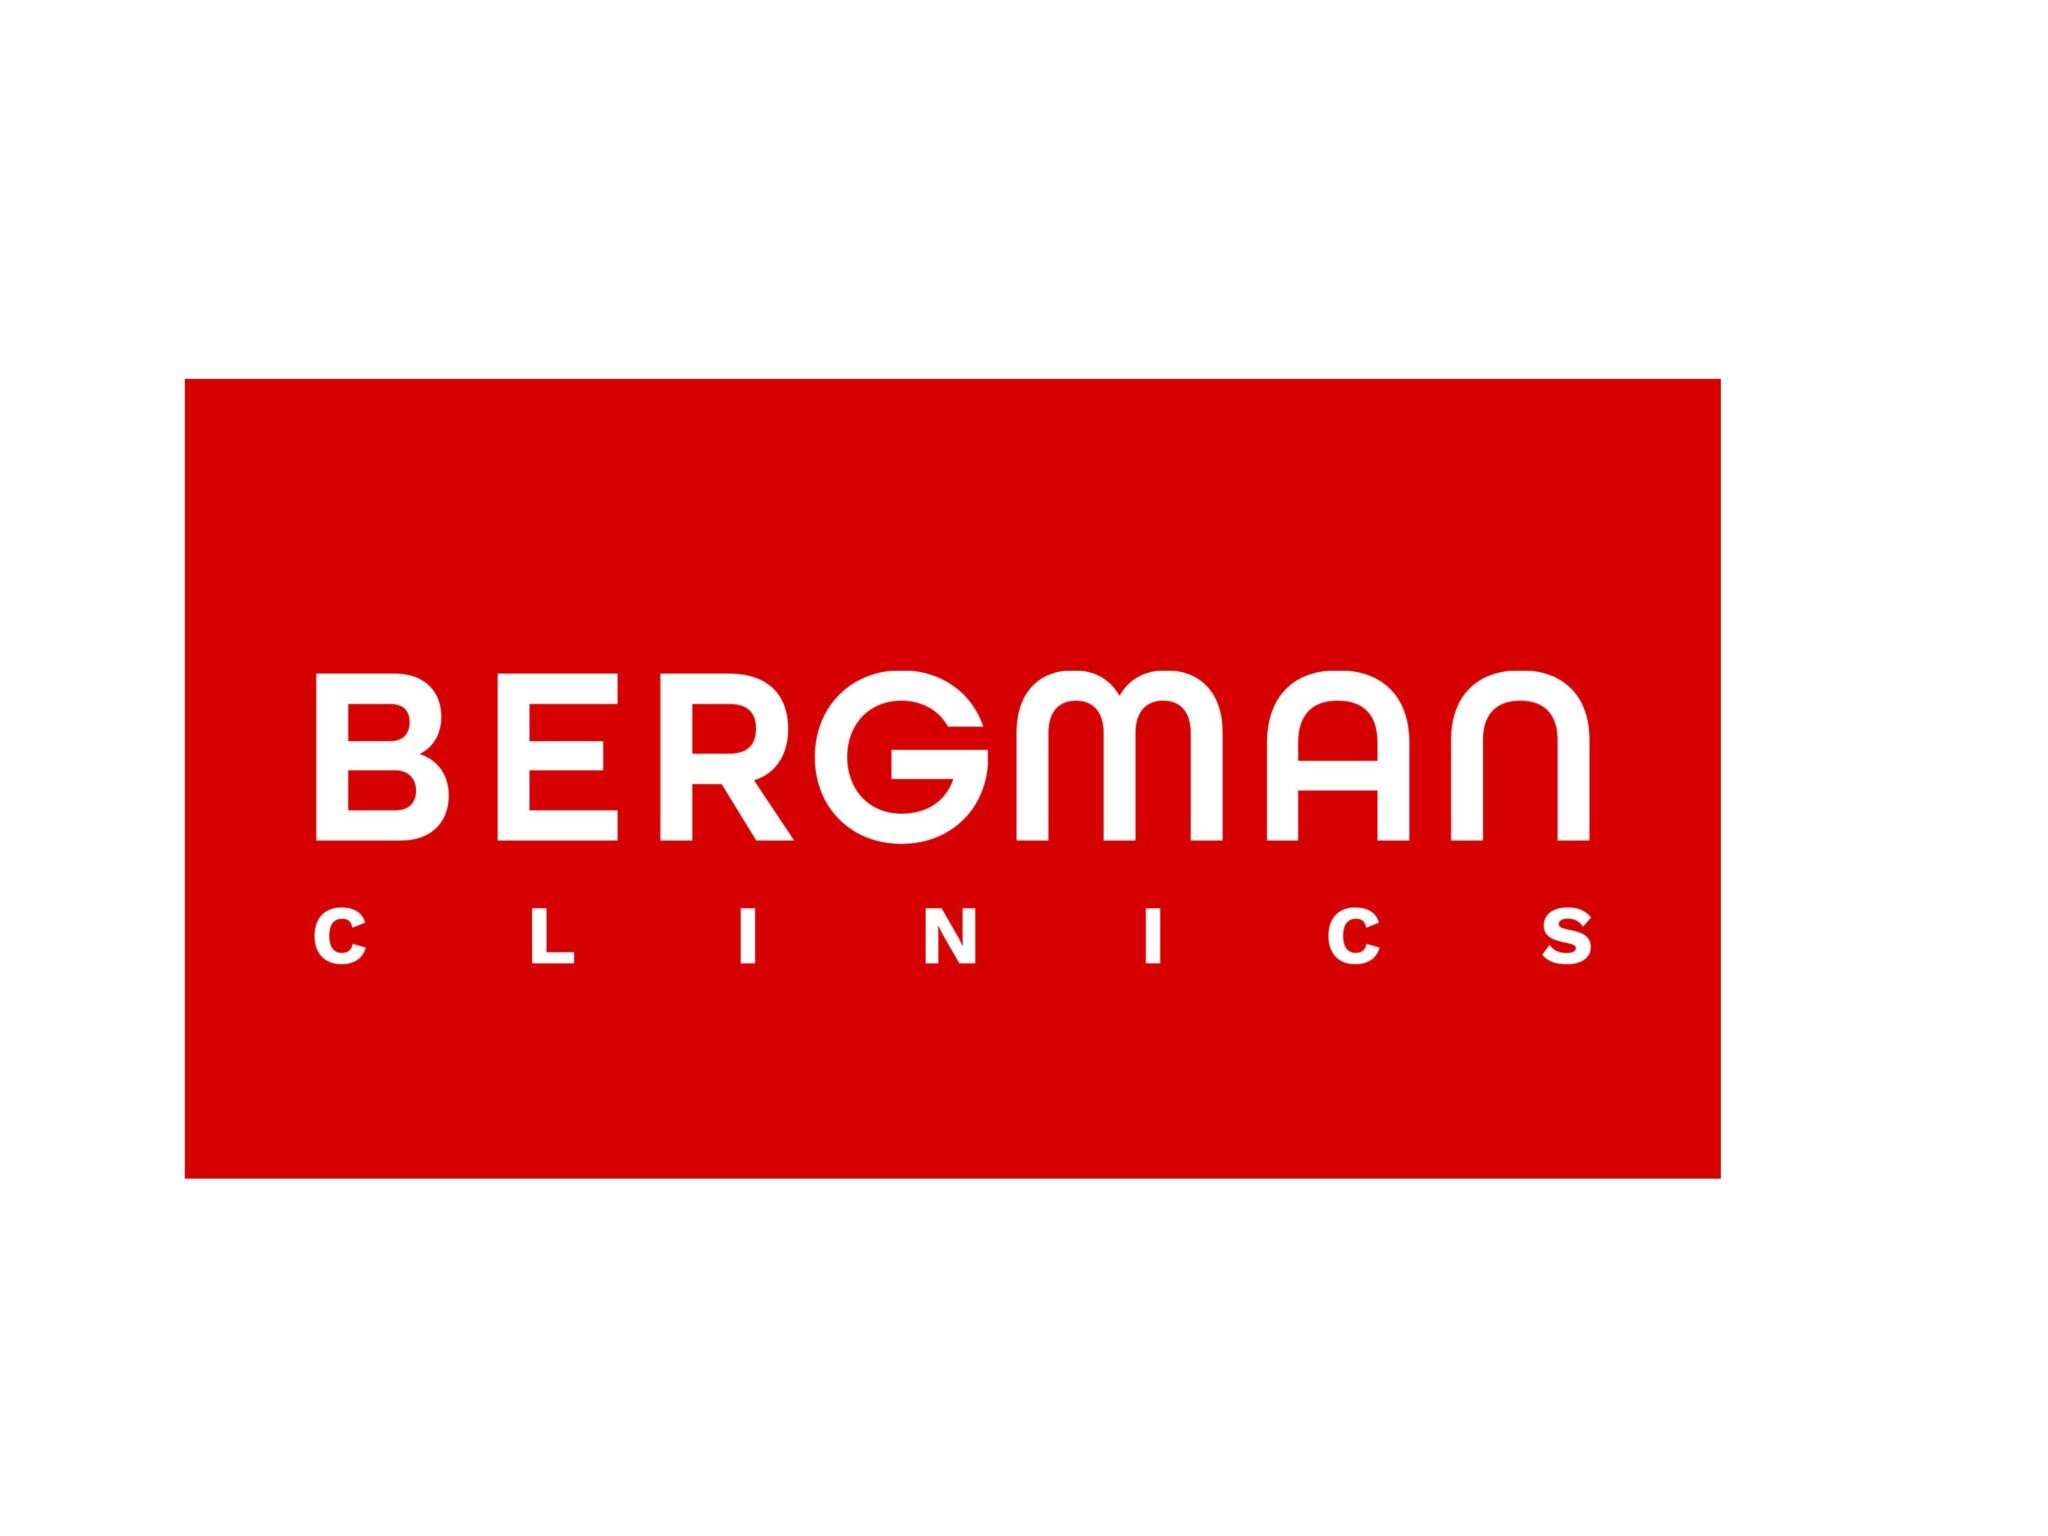 Bergman clinics logo